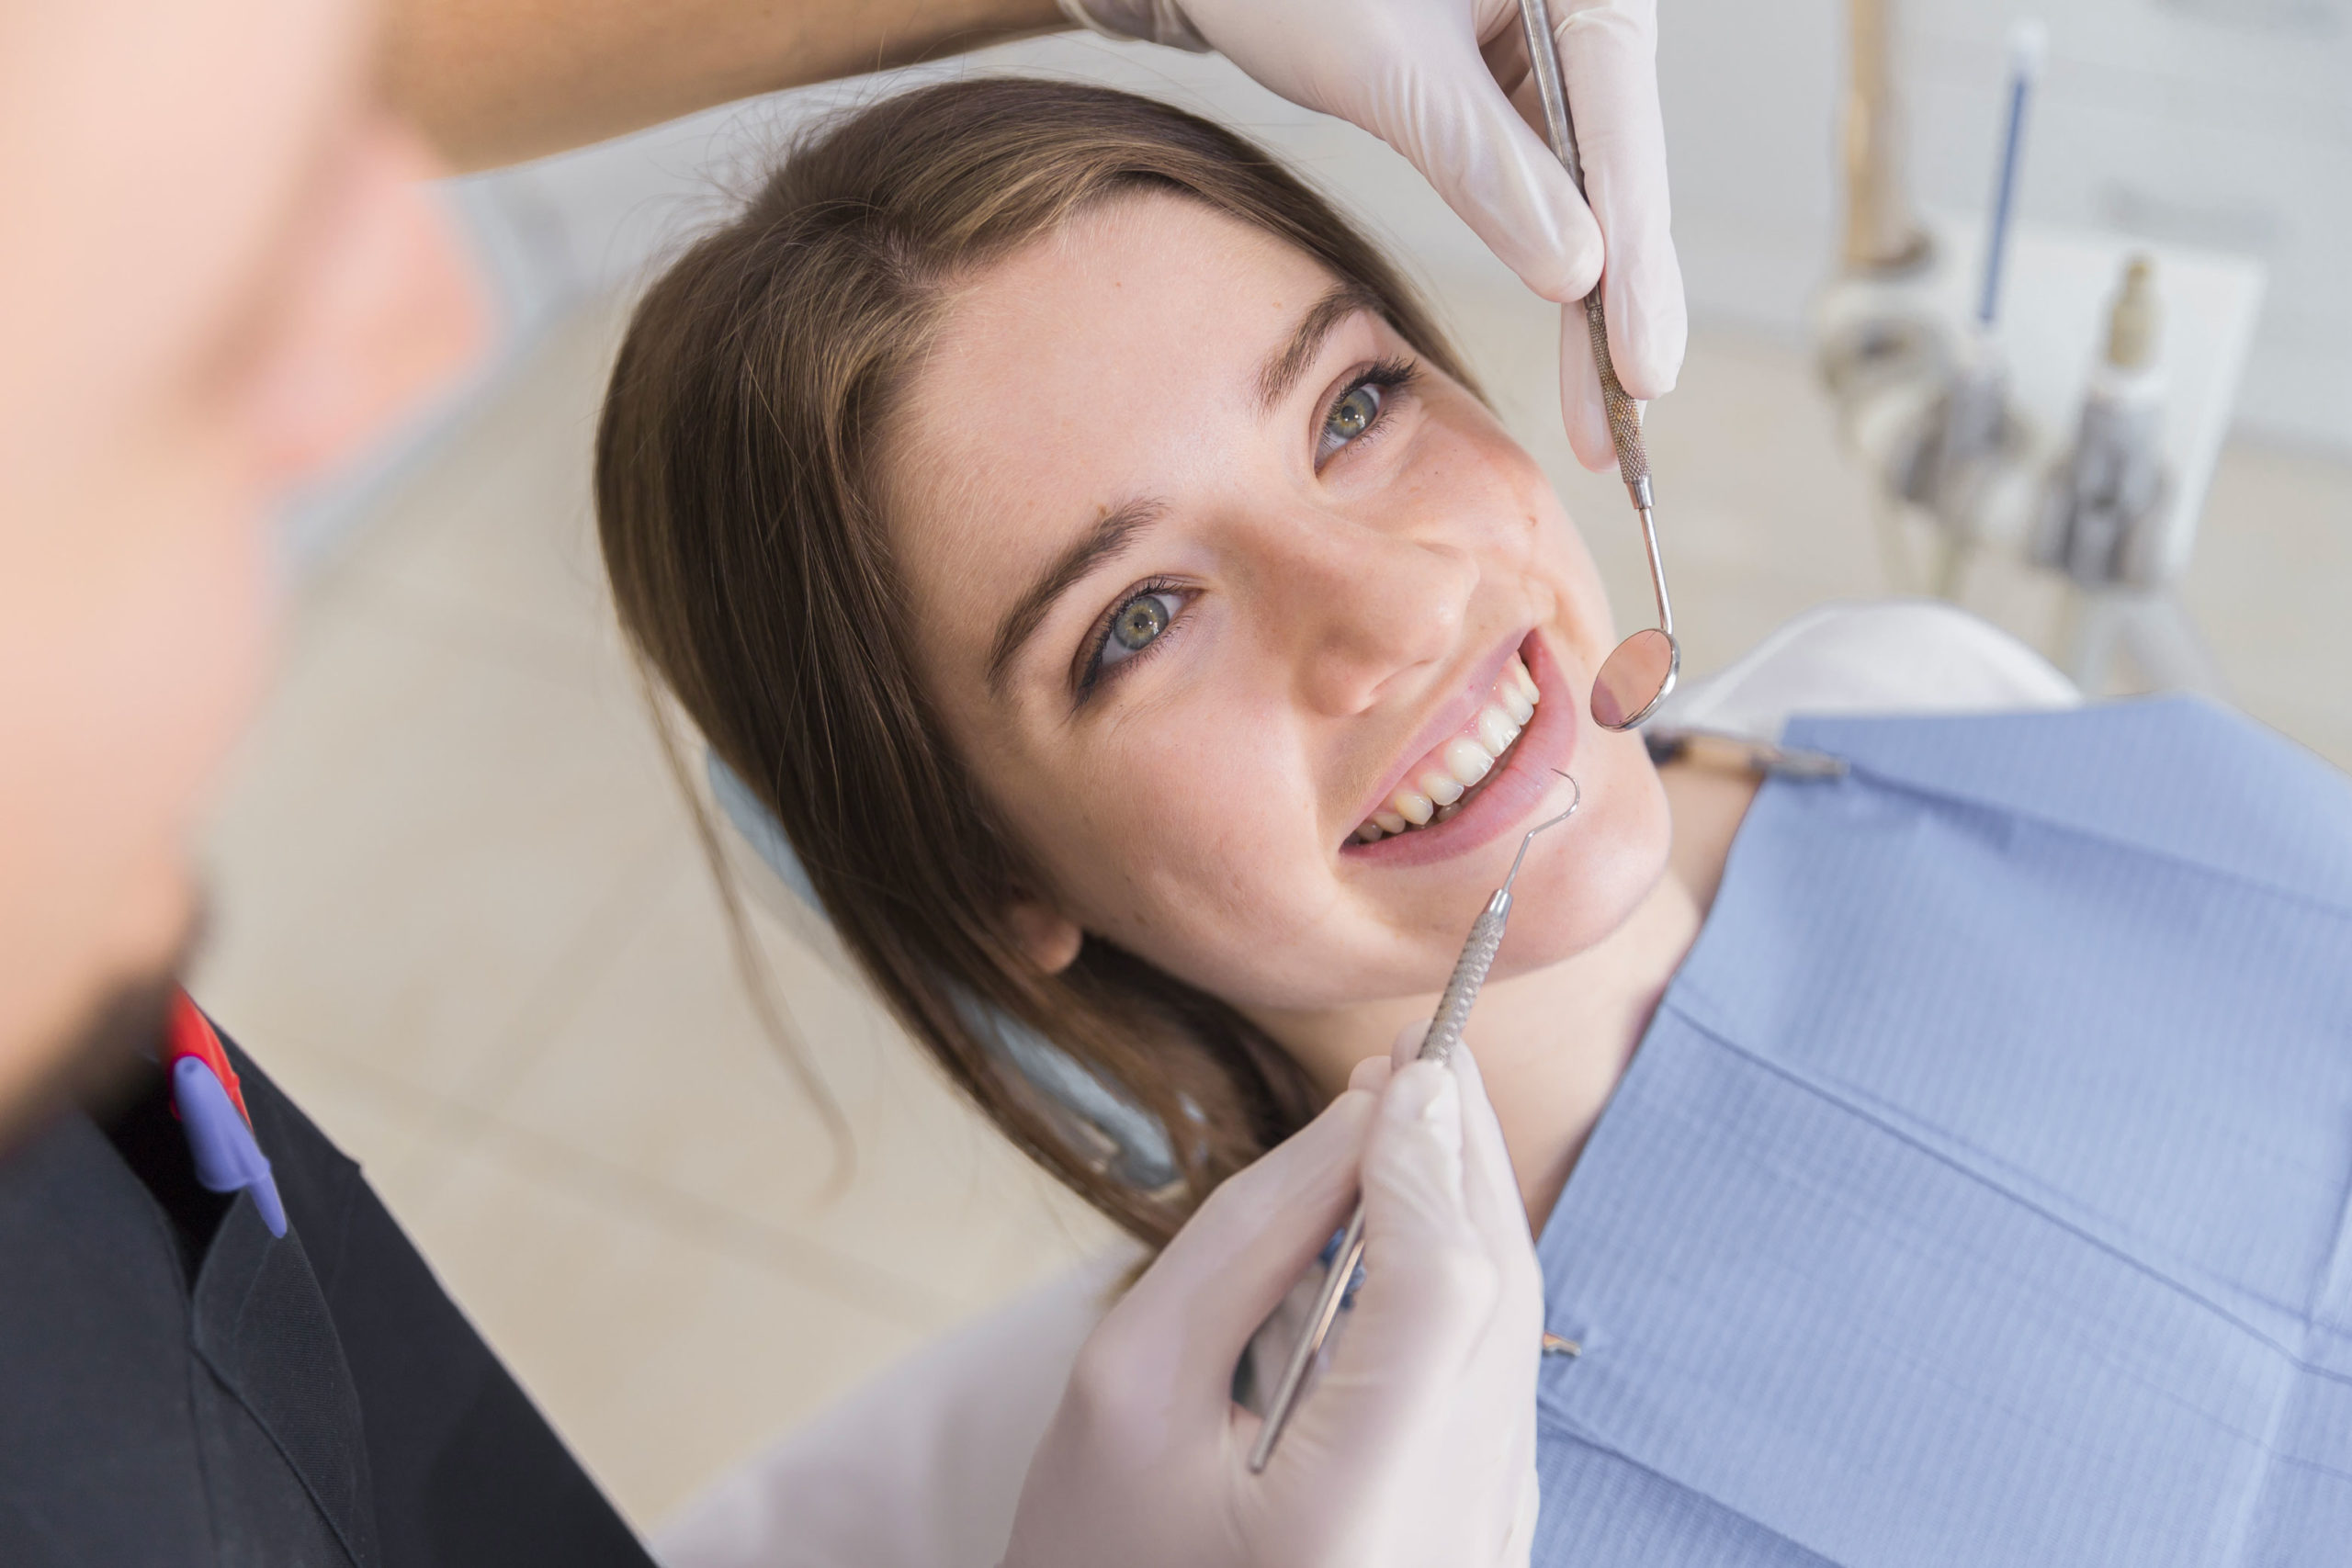 Dental care and dental emergencies